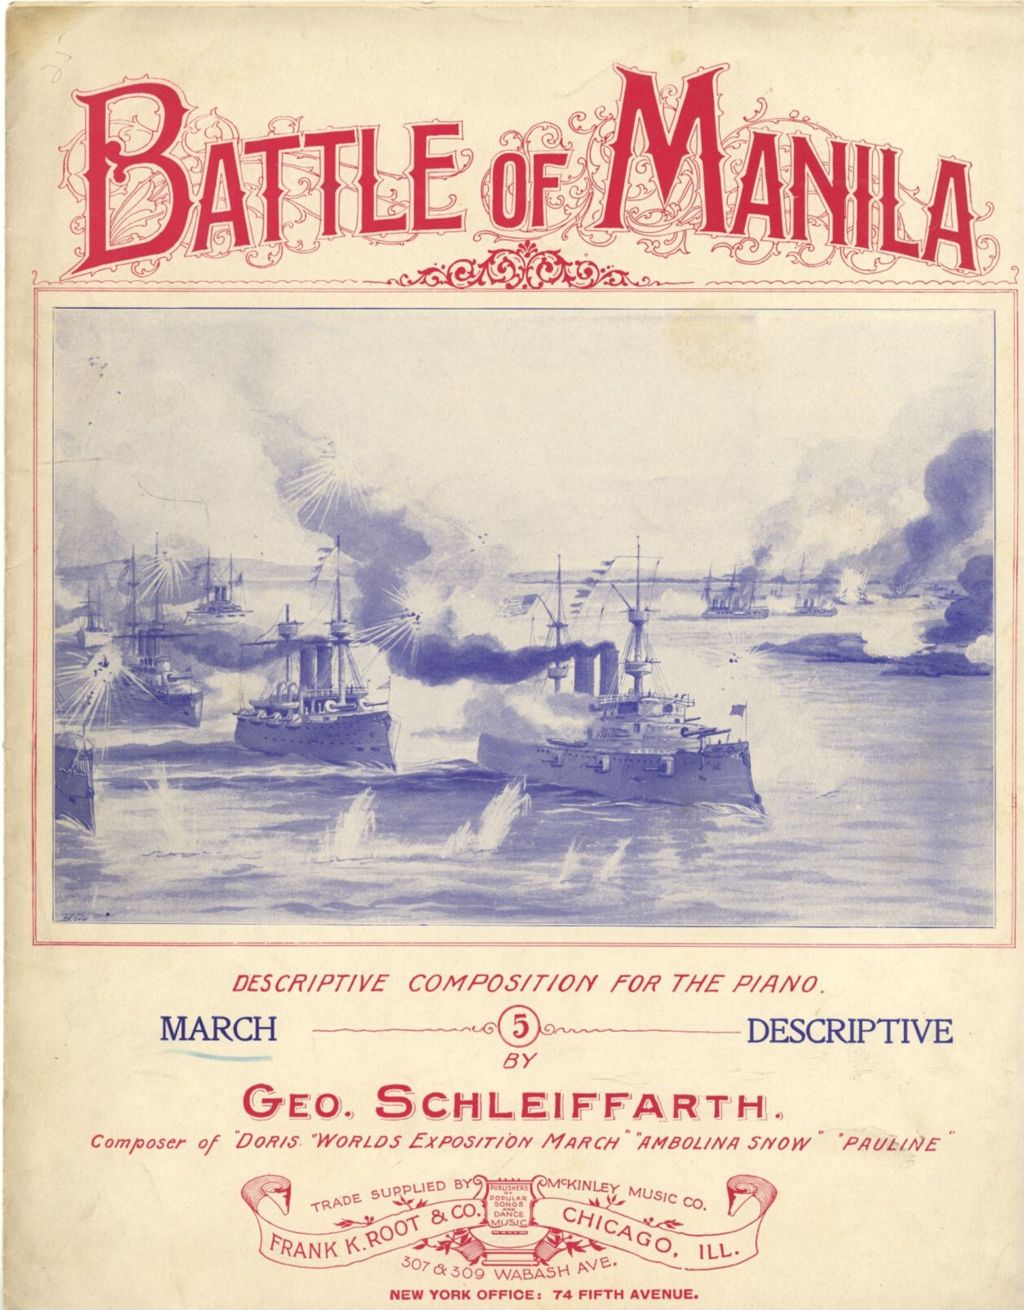 Miniature of Manila Grand March (Battle of Manila)